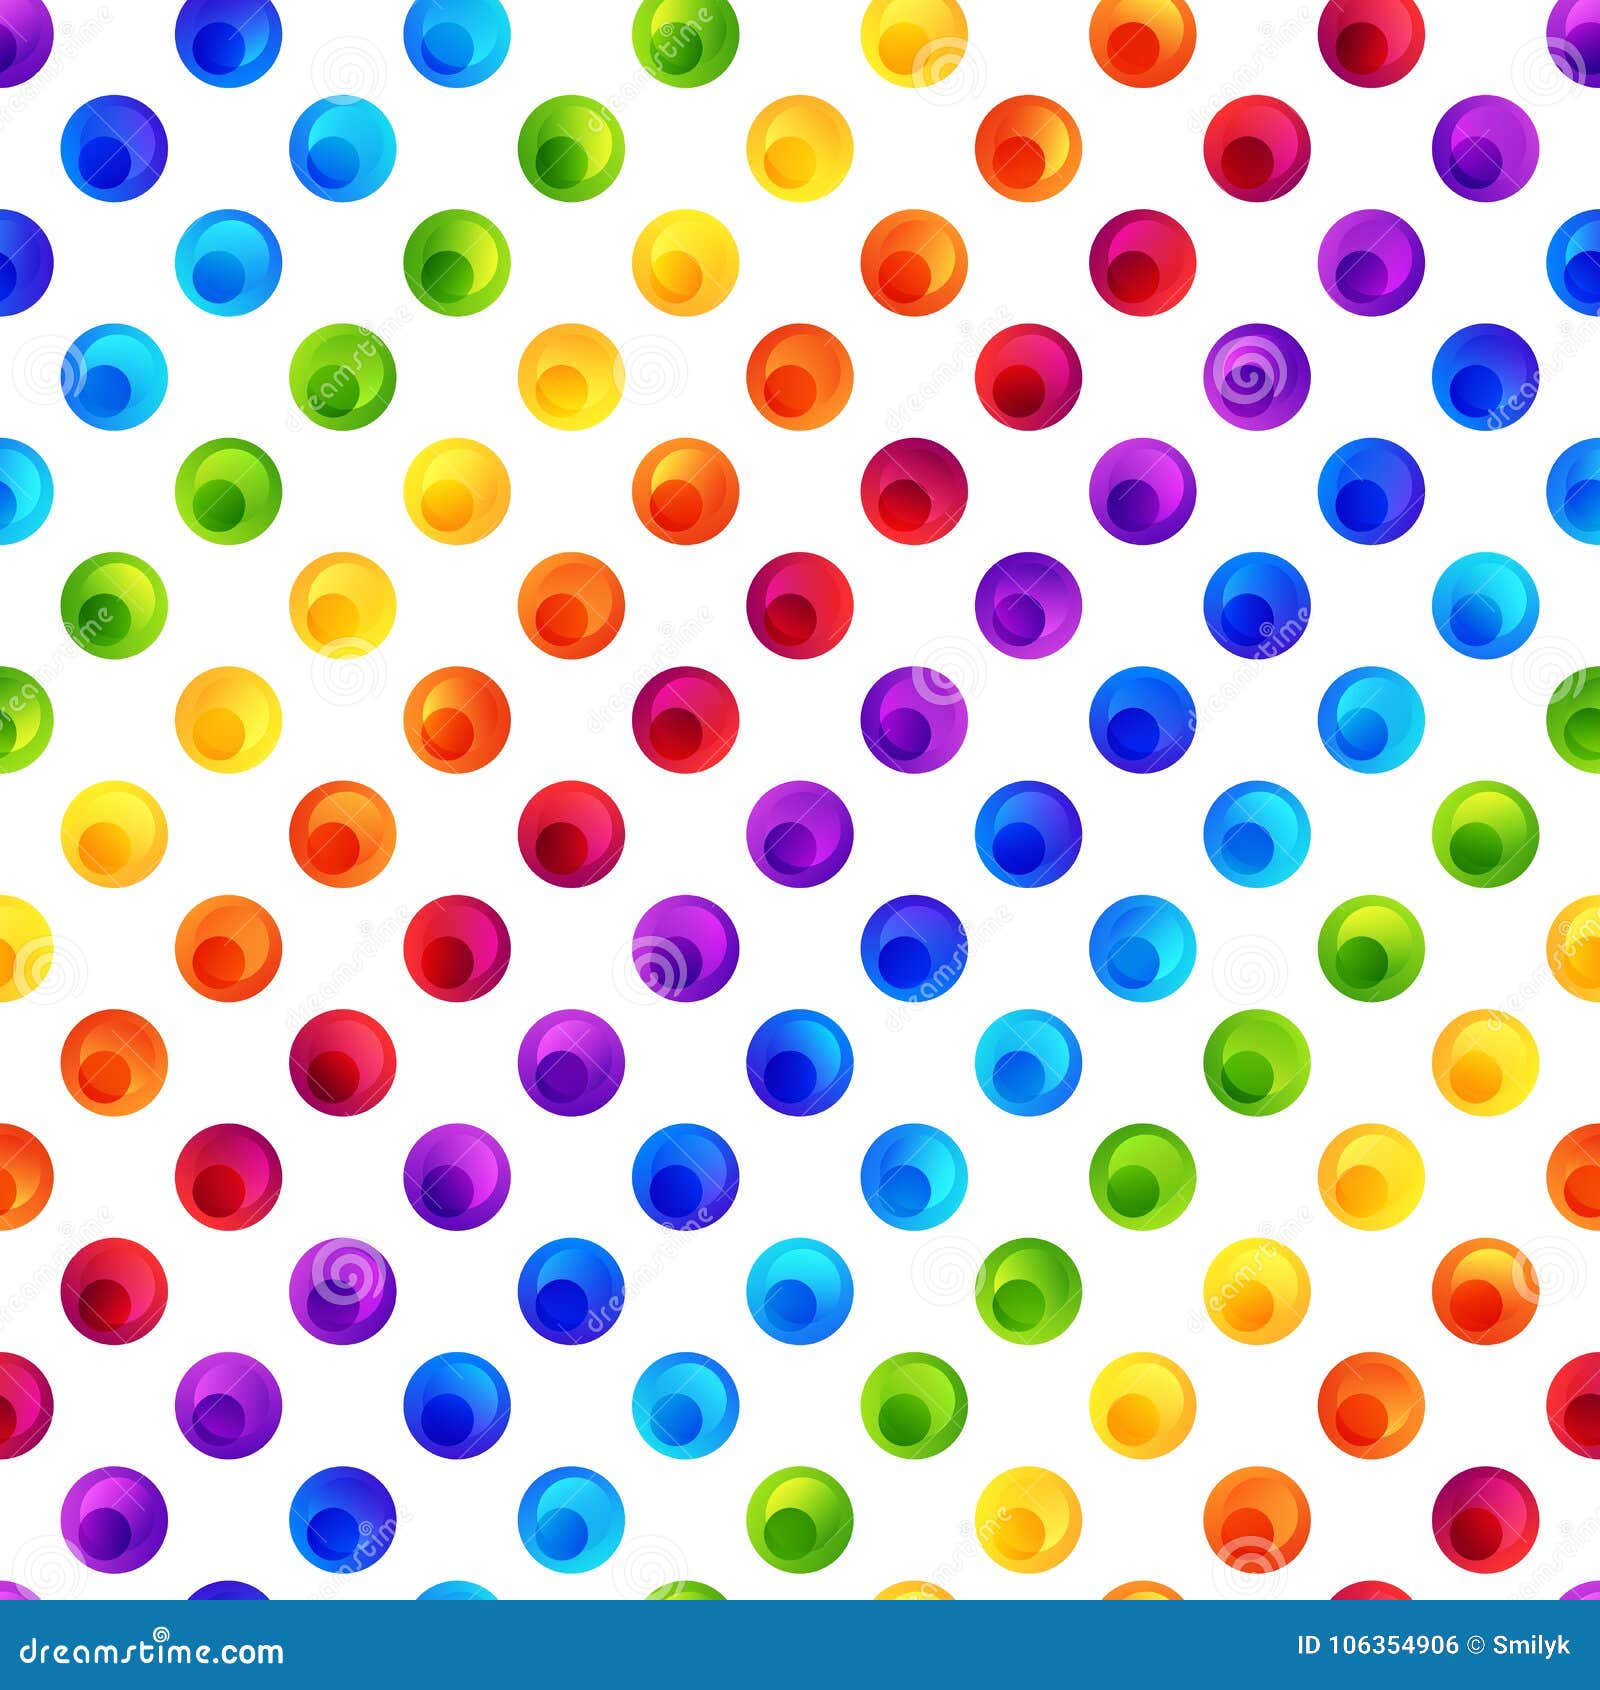 17,059 Rainbow Polka Dots Images, Stock Photos, 3D objects